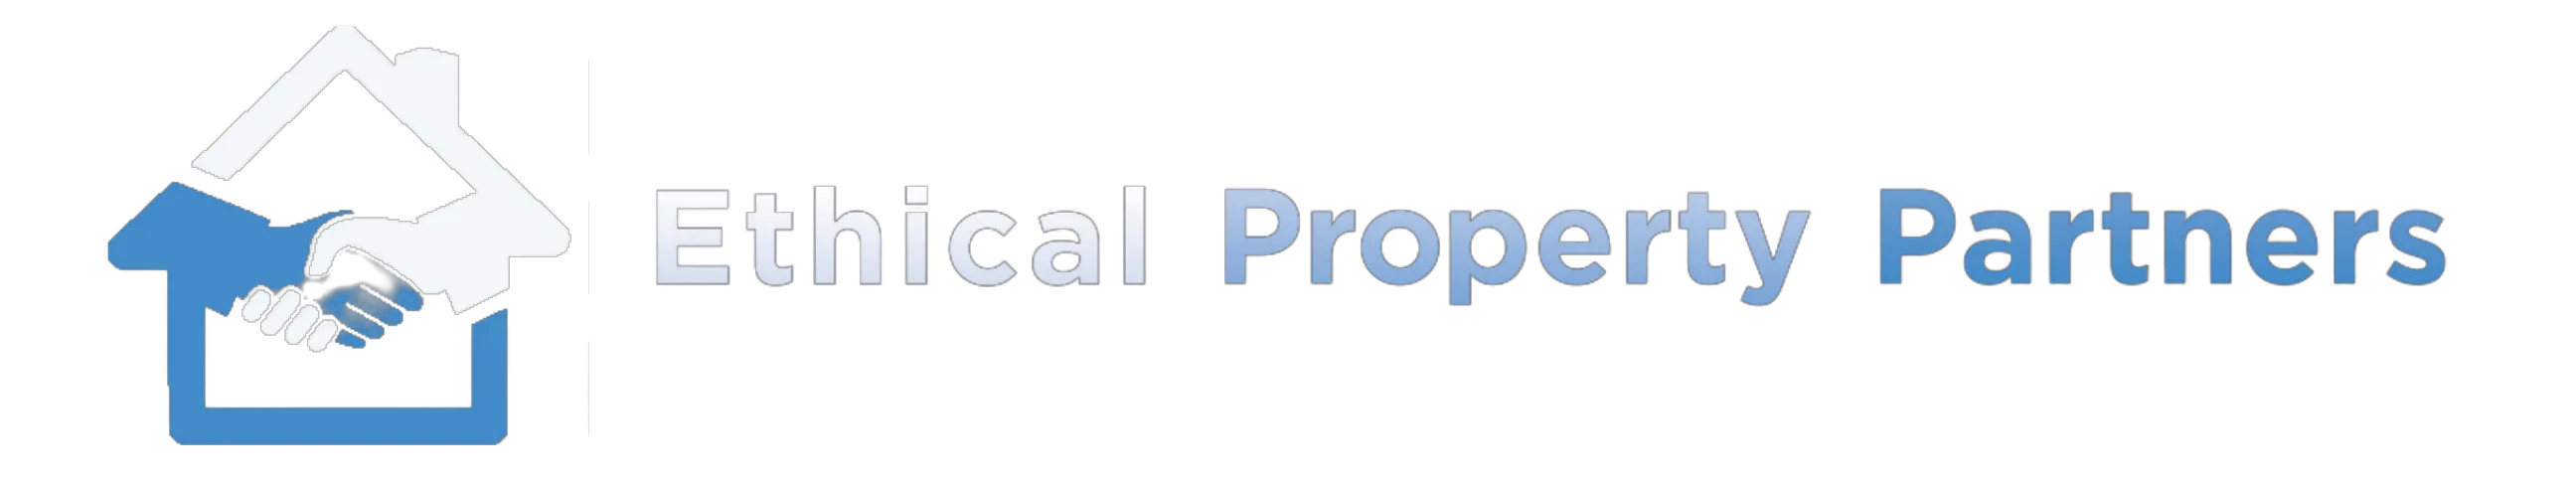 Ethical Property Partners Logo